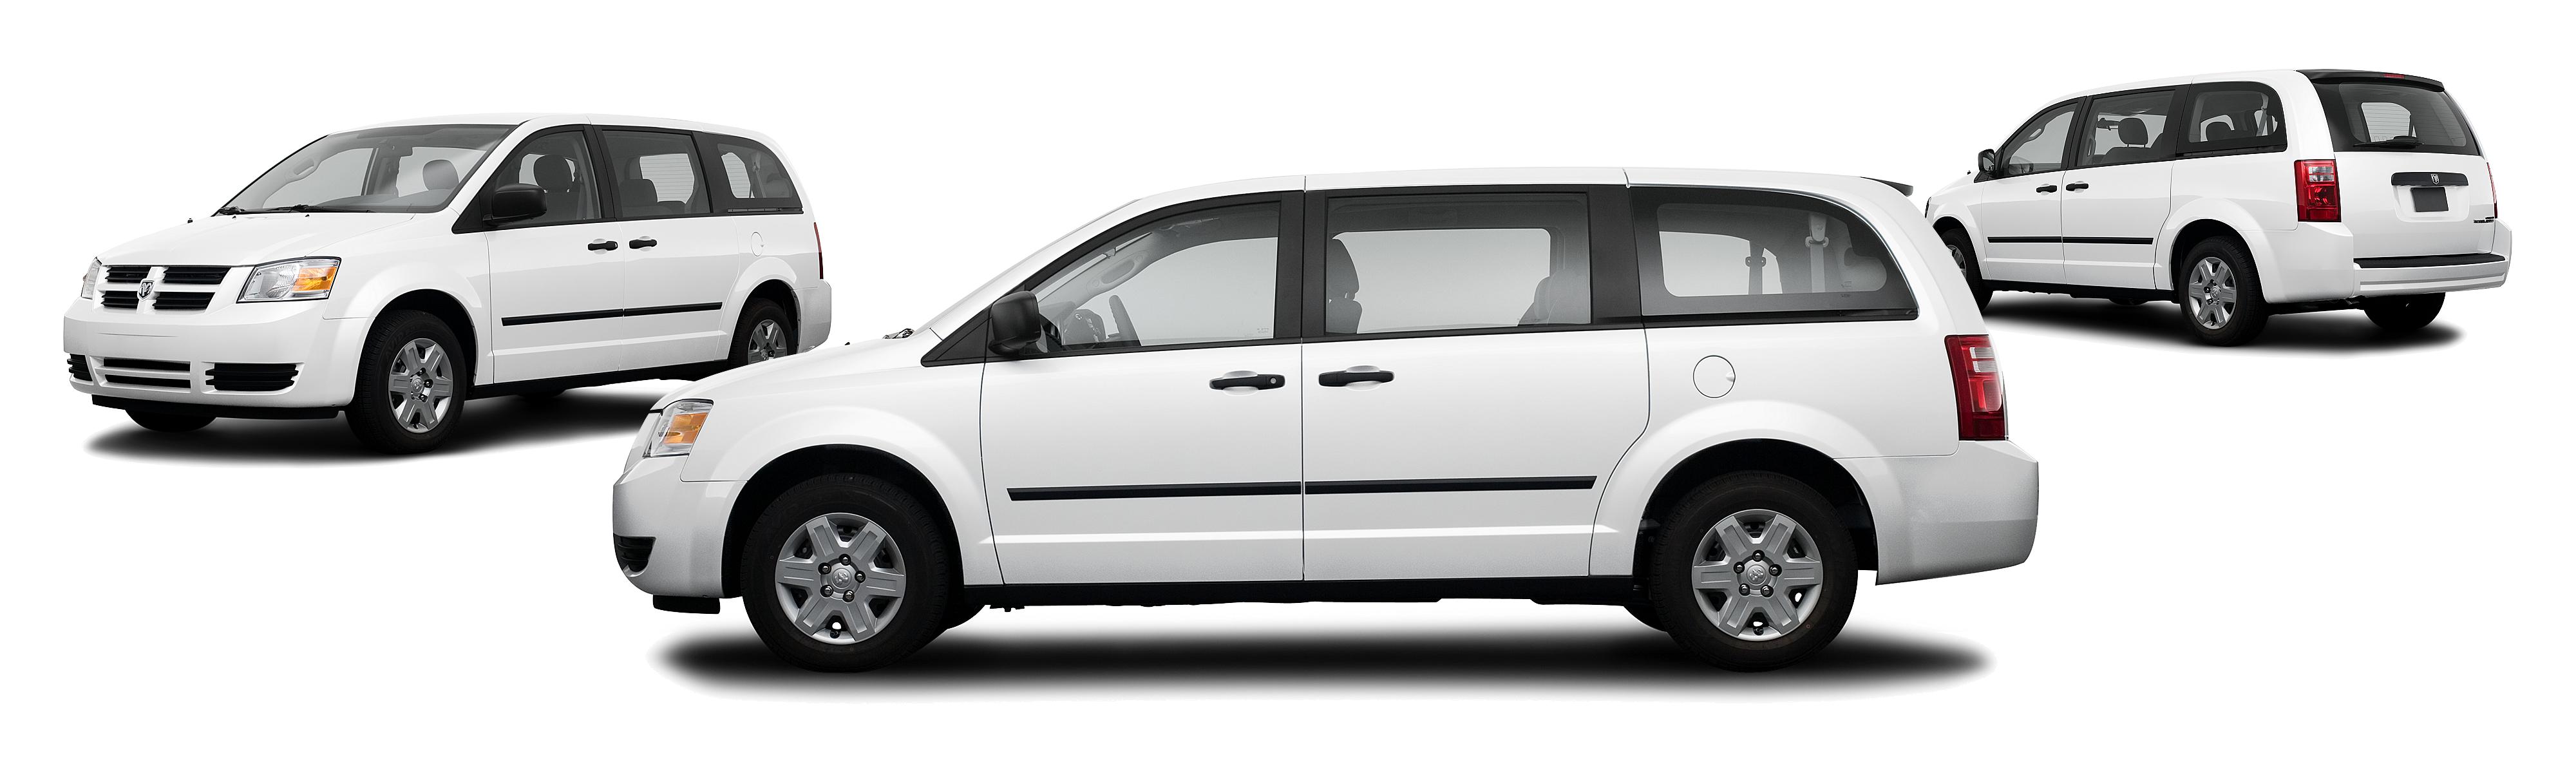 2008 Dodge Grand Caravan SE 4dr Extended Mini-Van - Research - GrooveCar